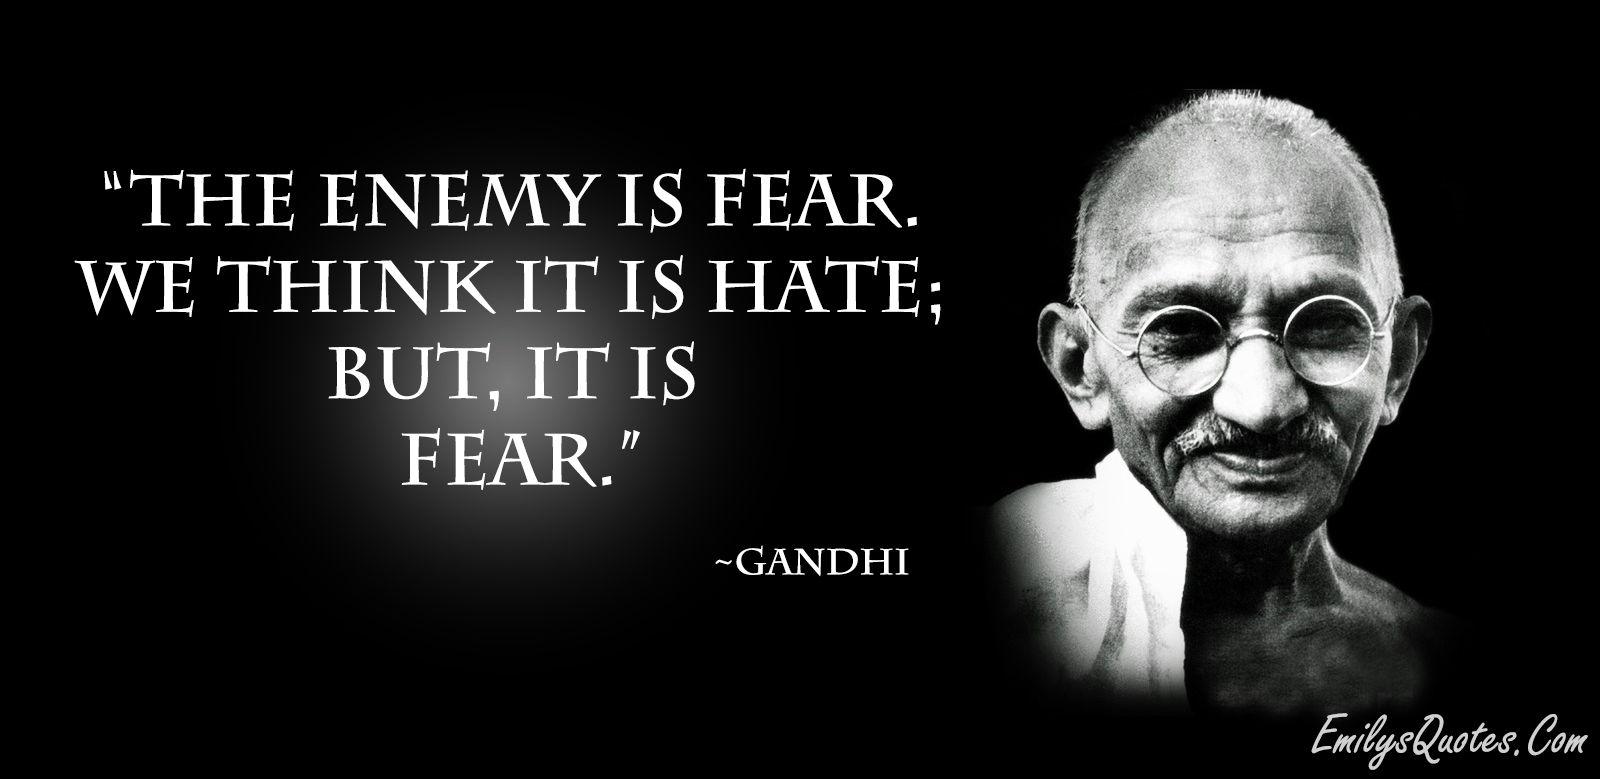 The enemy is fear. We think it is hate; but, it is fear